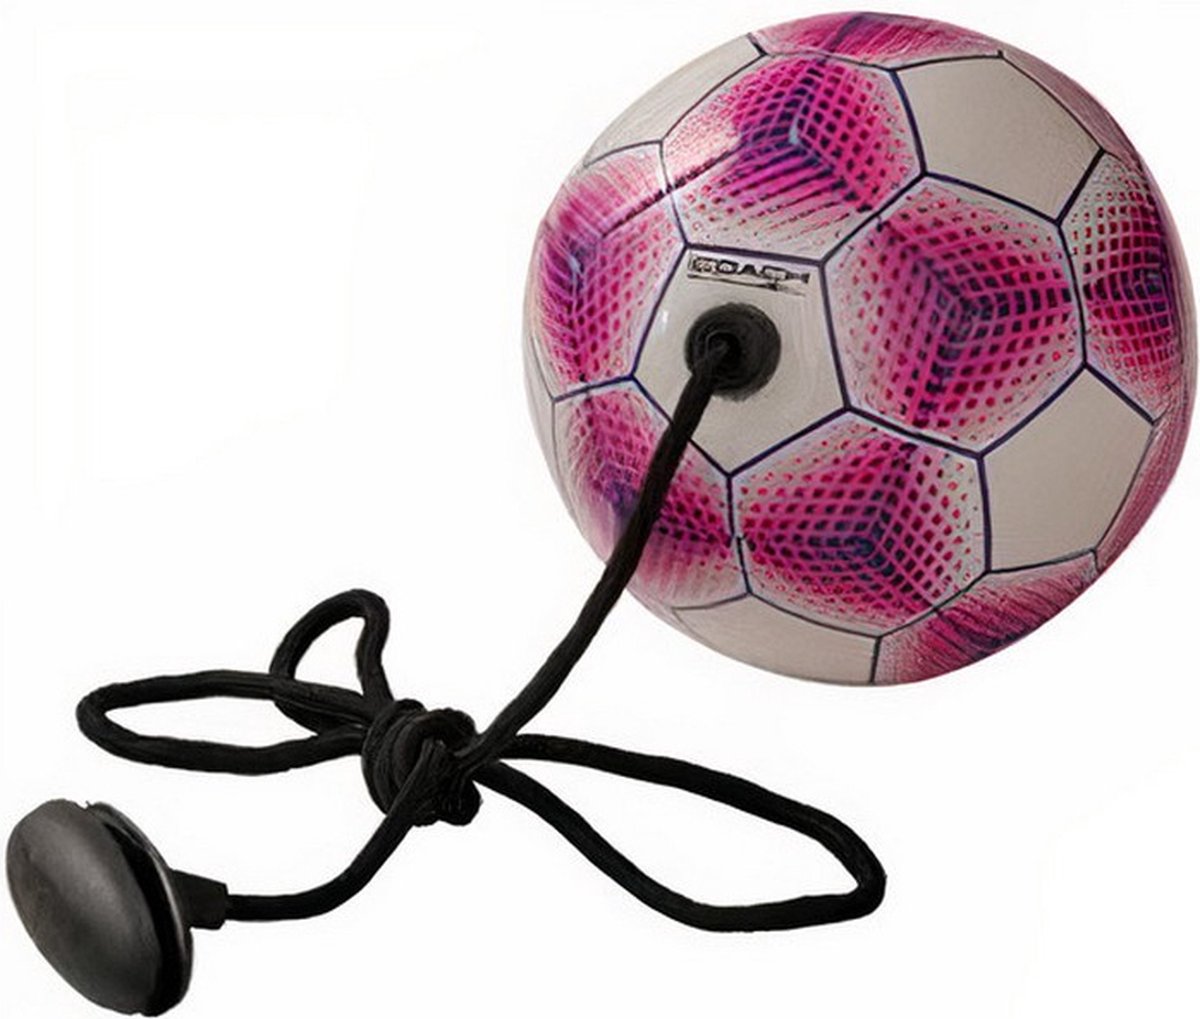 voetbal iCoach Mini 3.0 polyurethaan roze/wit